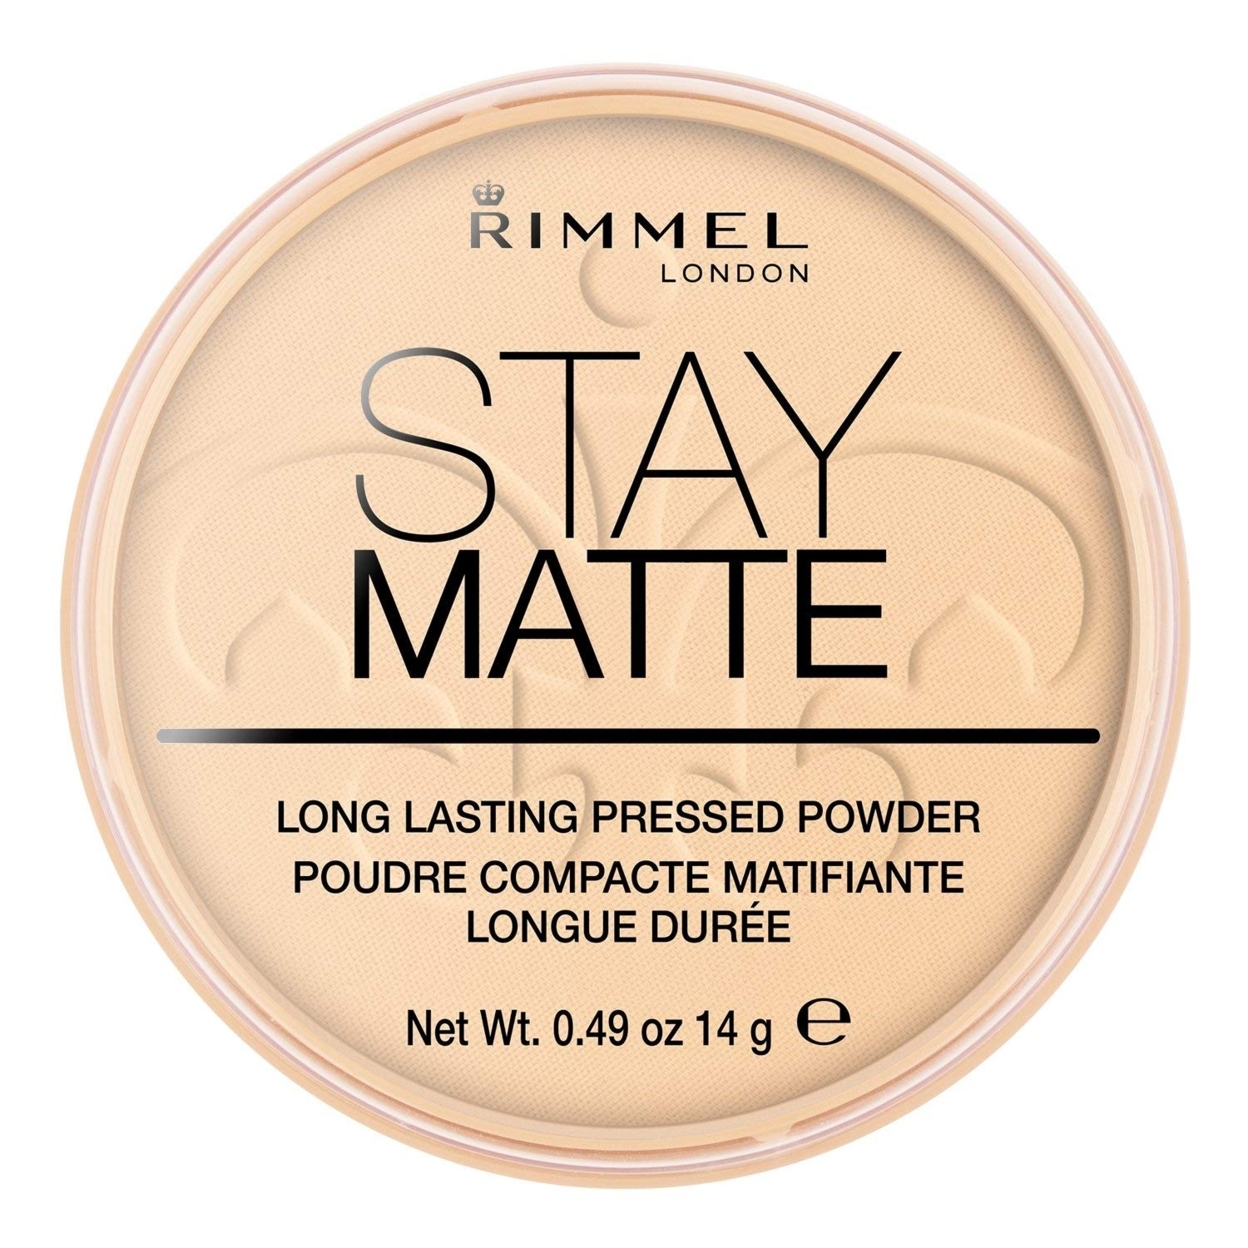 Rimmel London Stay Matte Pressed Powder, Transparent, 0.49 oz - image 1 of 5